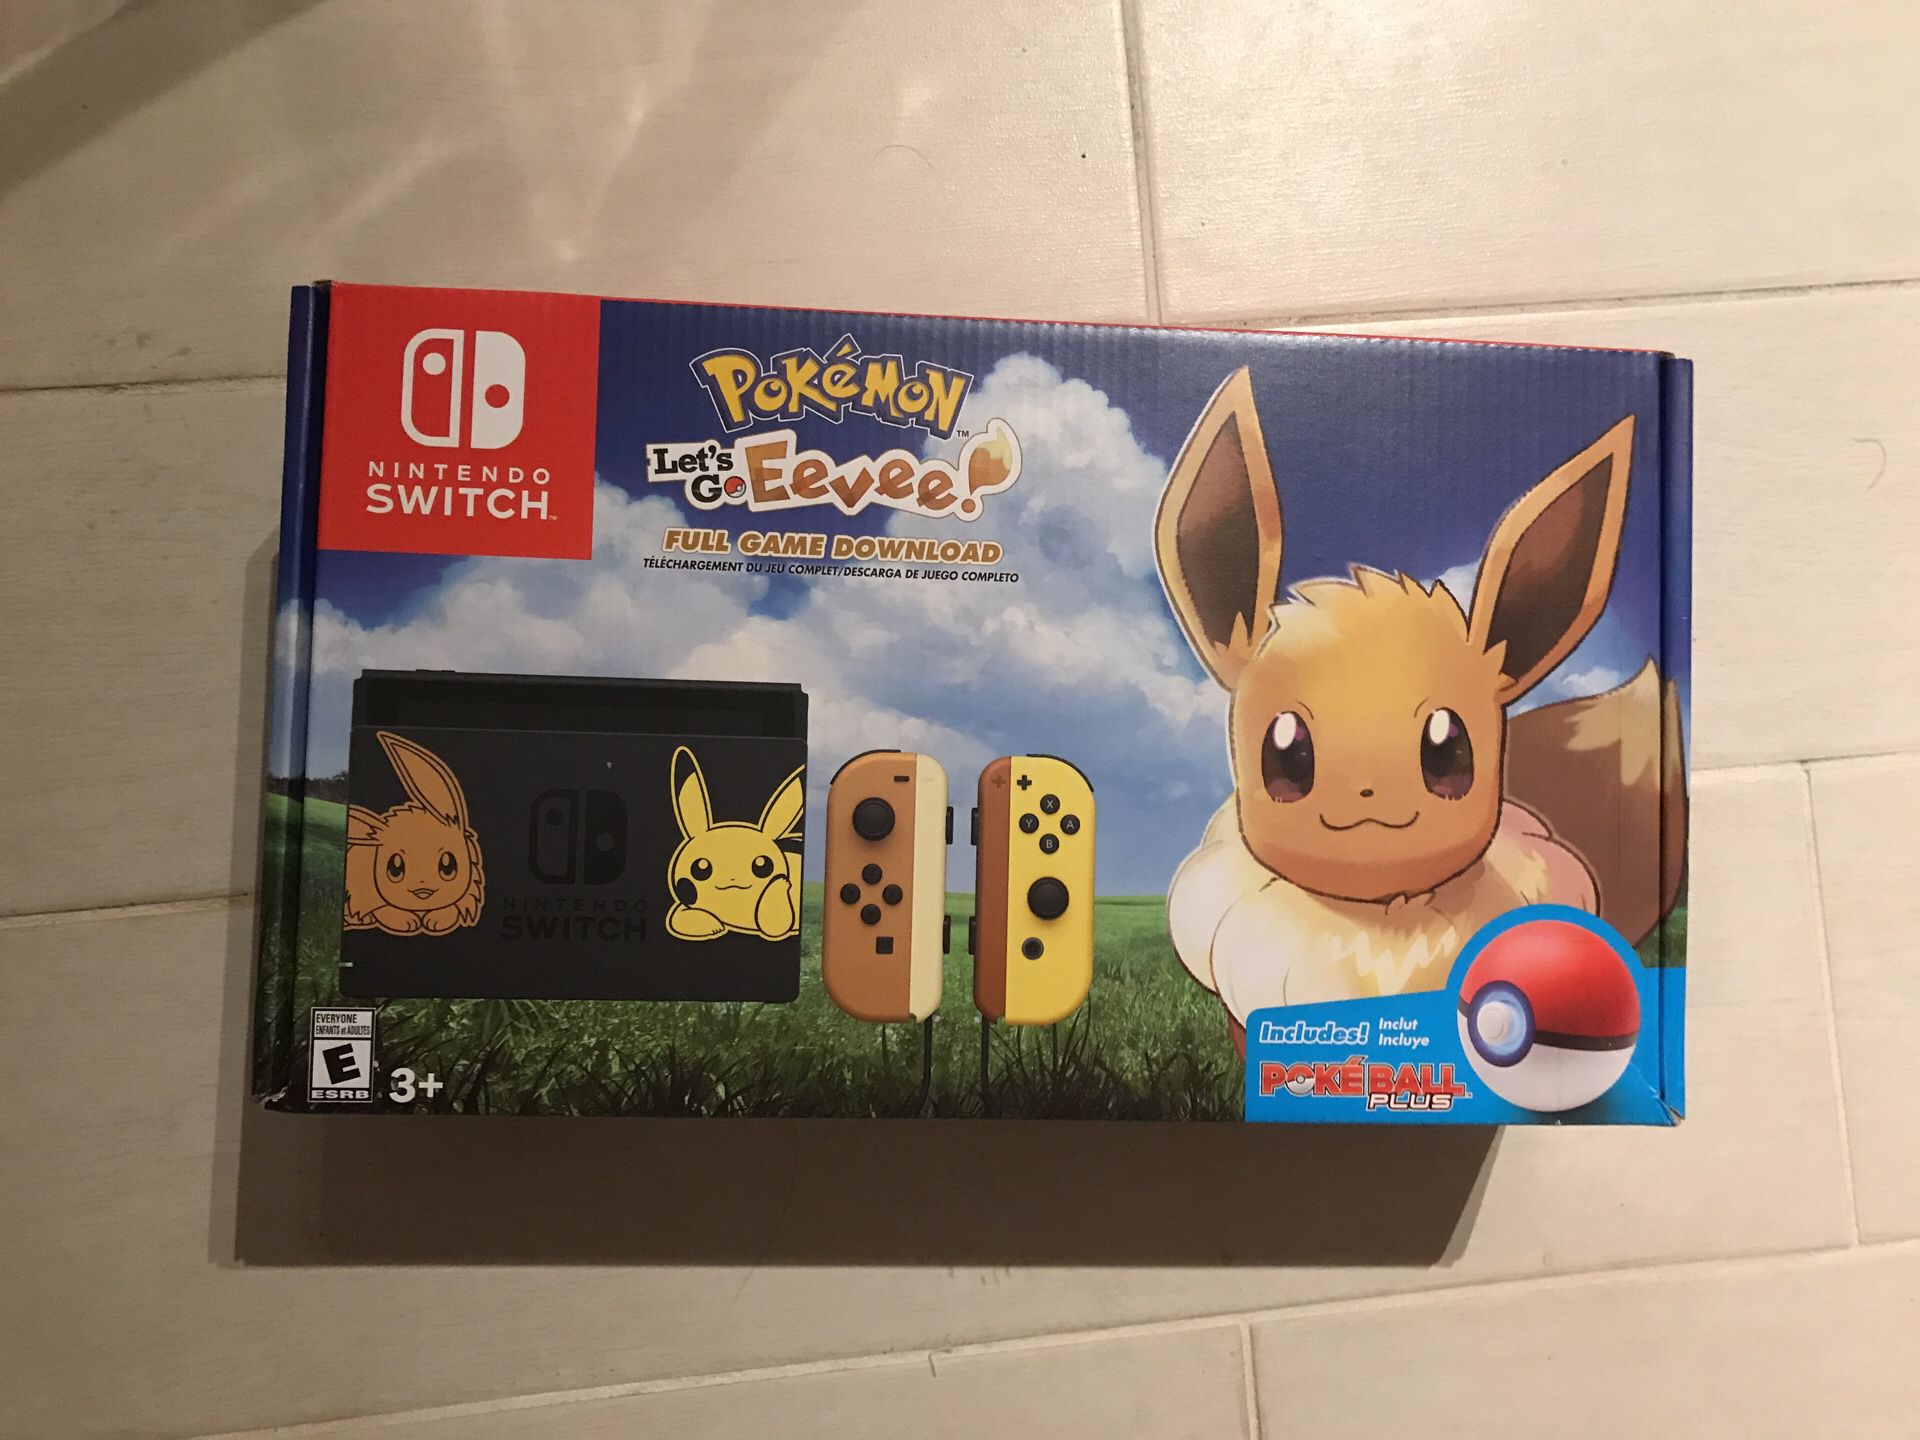 romersk vagt Hen imod Nintendo Switch Pikachu & Eevee Edition with Pokemon: Let's Go, Pikachu!  Bundle for Sale in Hialeah, FL - OfferUp